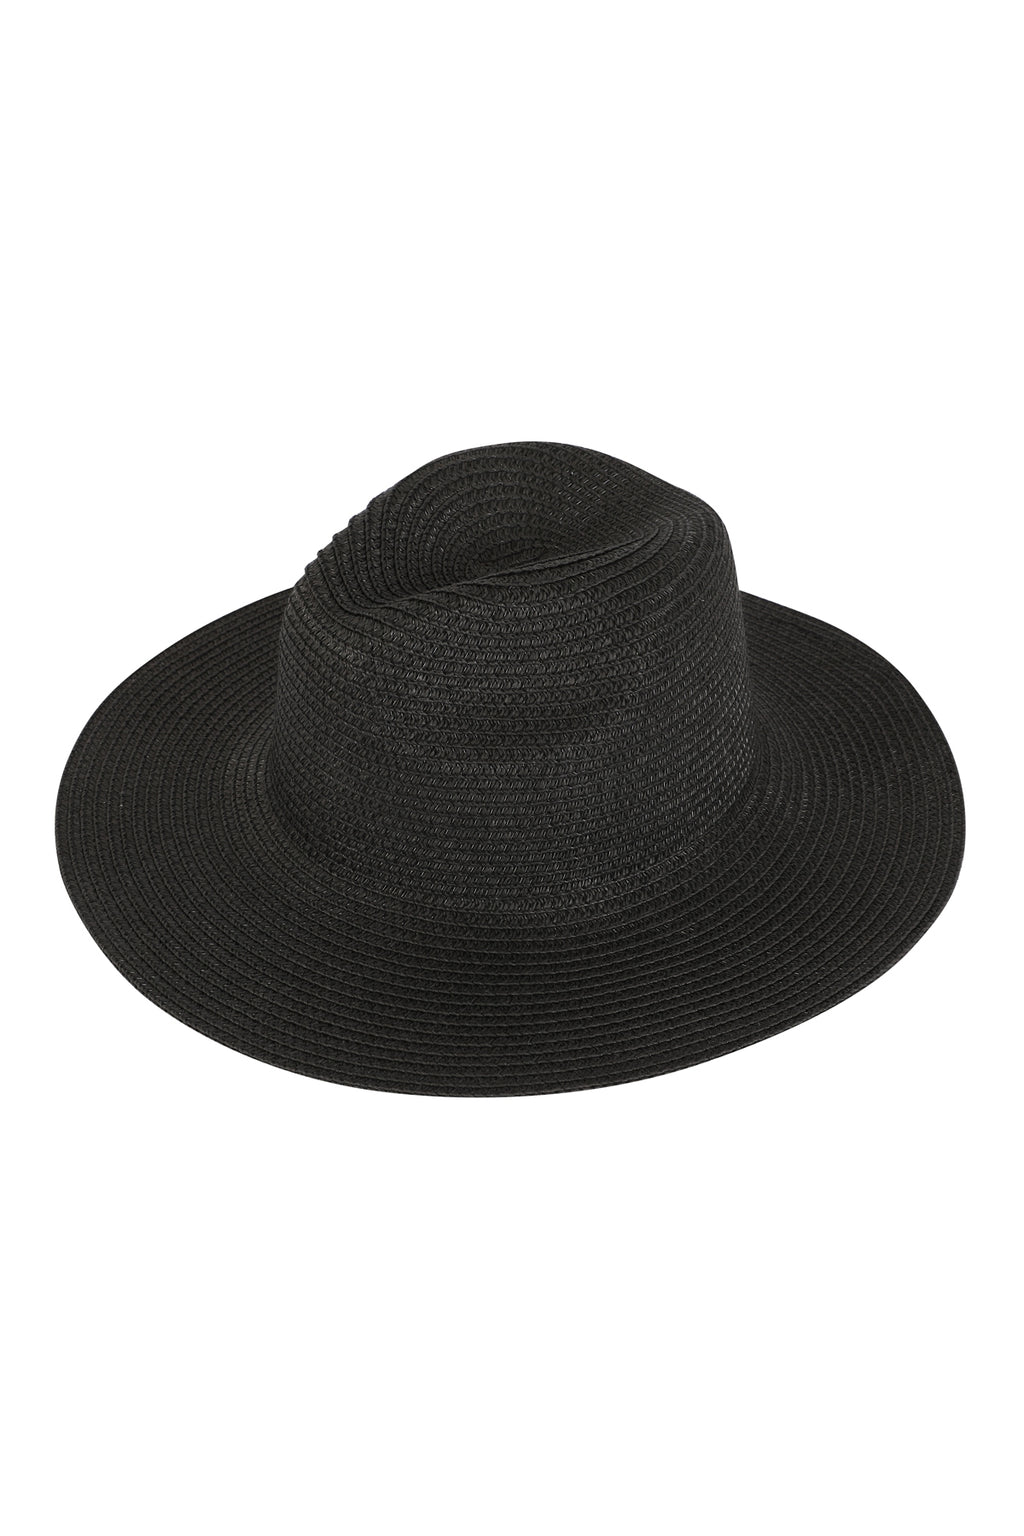 Classic Panama Brim Summer Hat Black - Pack of 6